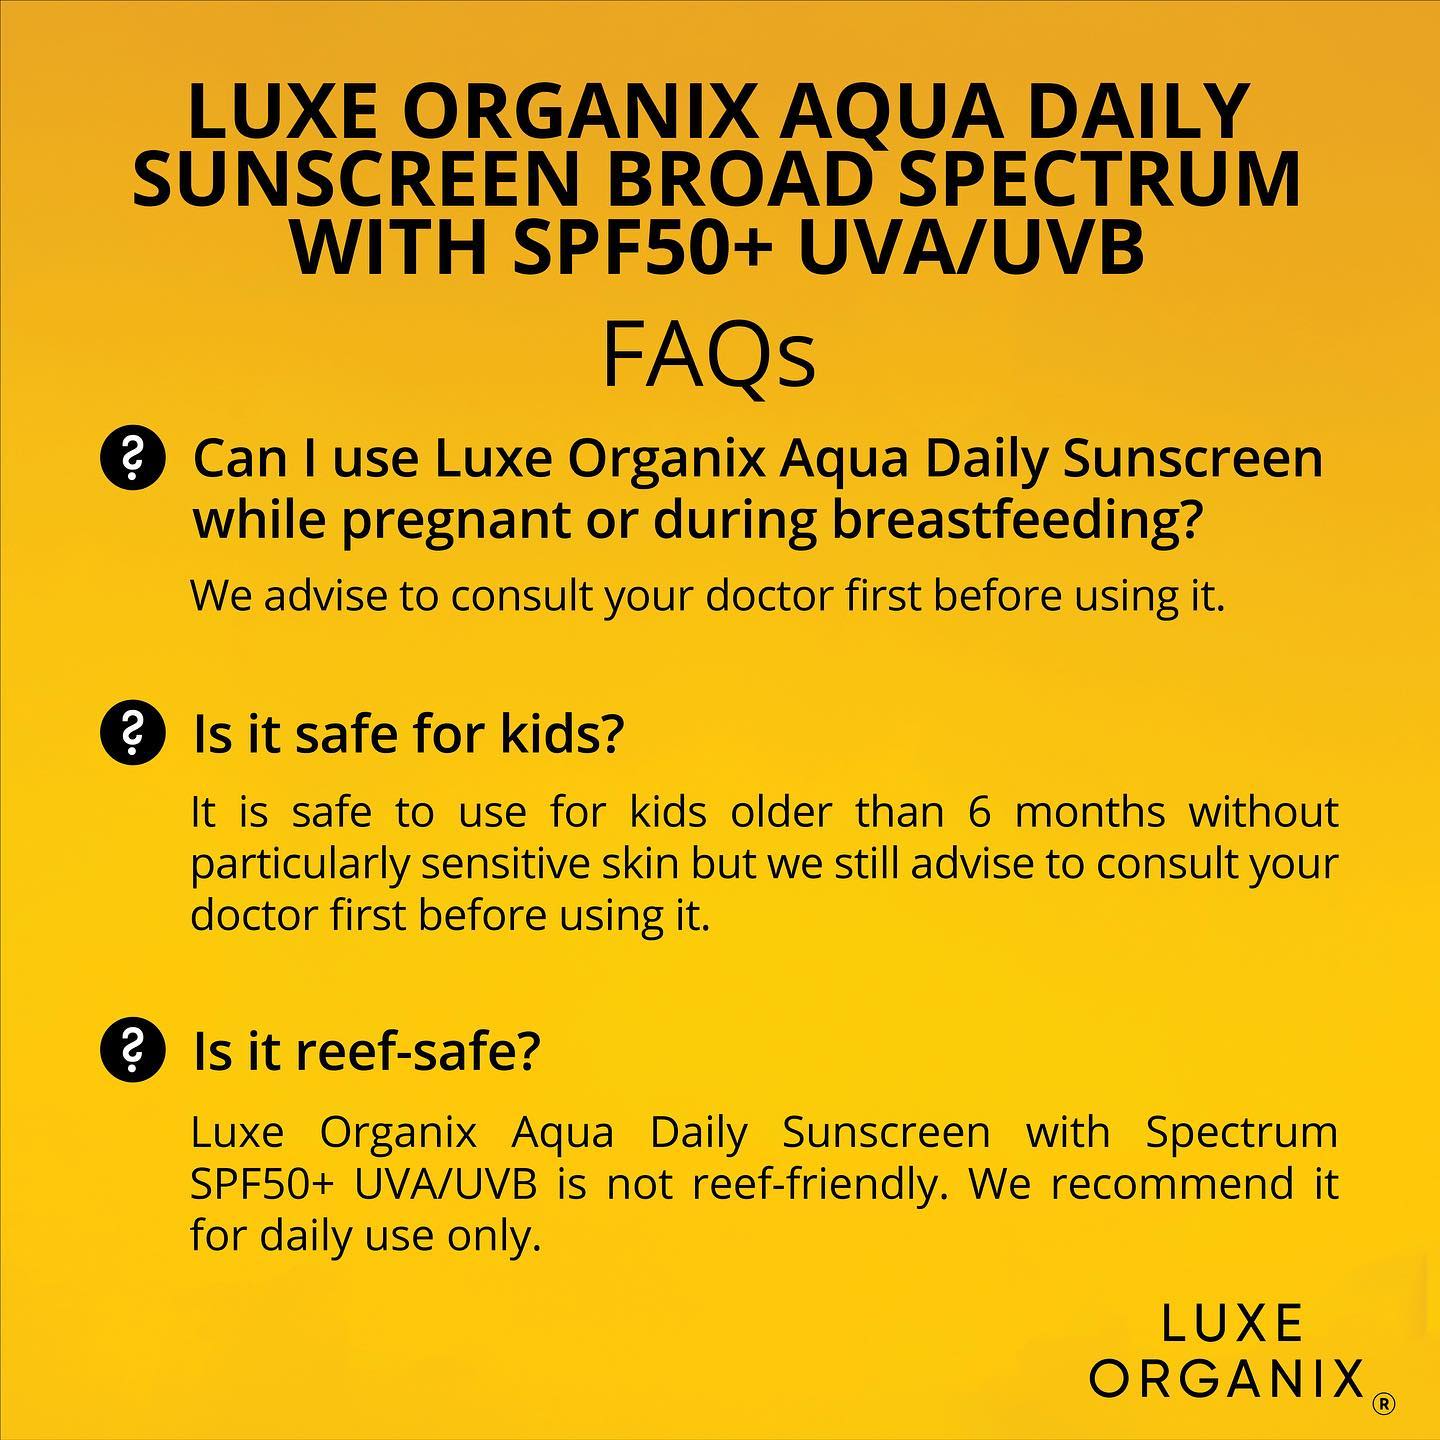 Aqua Daily Sunscreen SPF50+ PA+++ 50ml